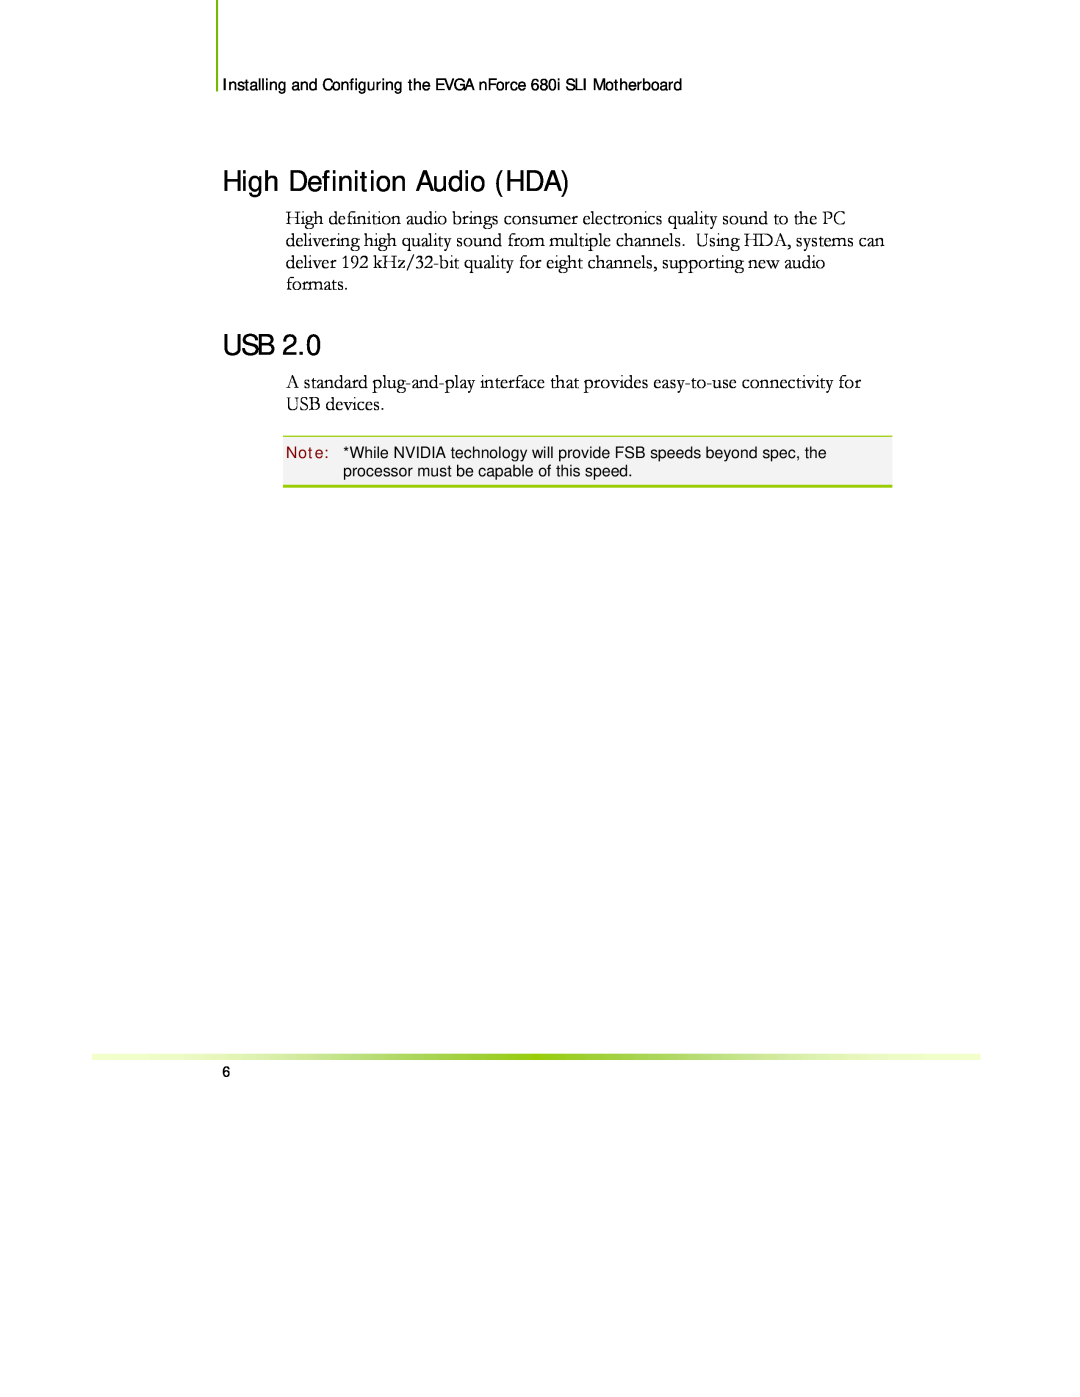 EVGA 122-CK-NF68-XX manual High Definition Audio HDA 